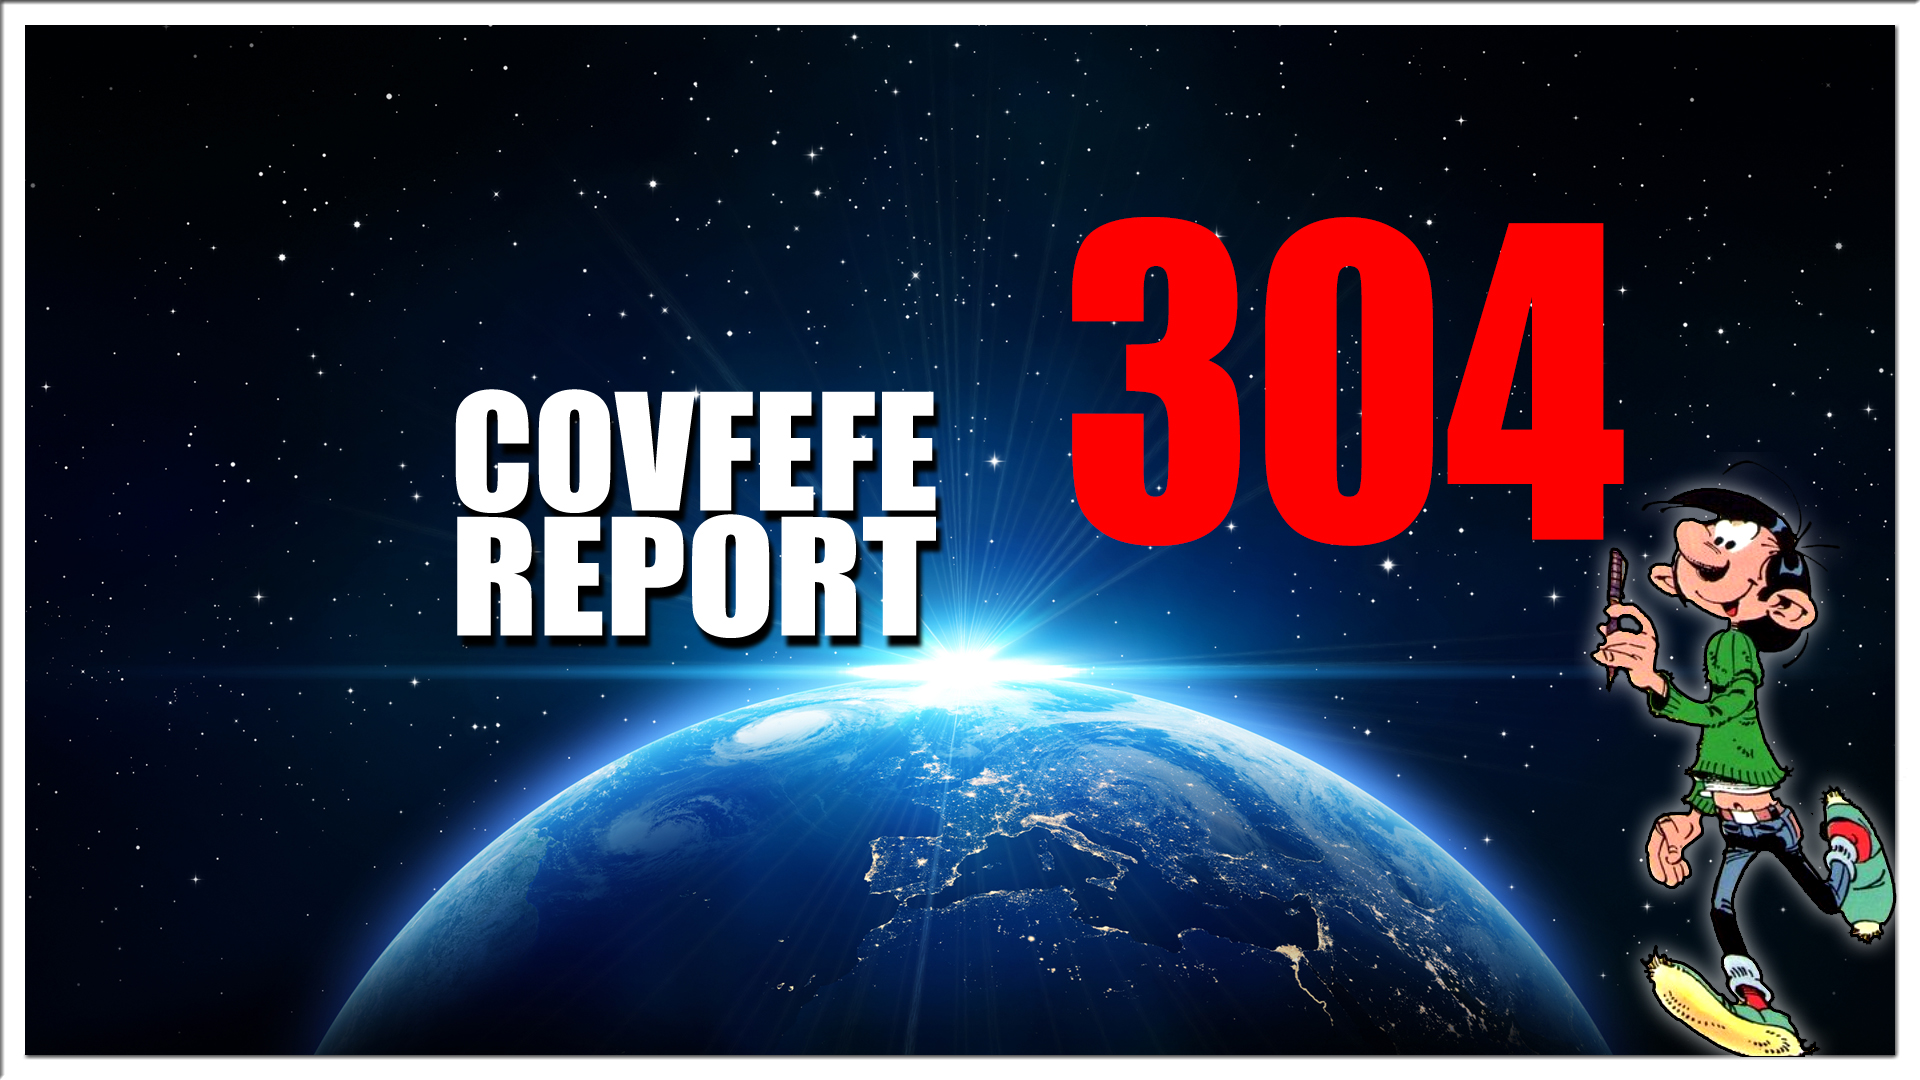 Covfefe Report 304. Home sweet home, Patriotten alert, Famke., Remdesiver is op!, Spoedwet, Corona melder